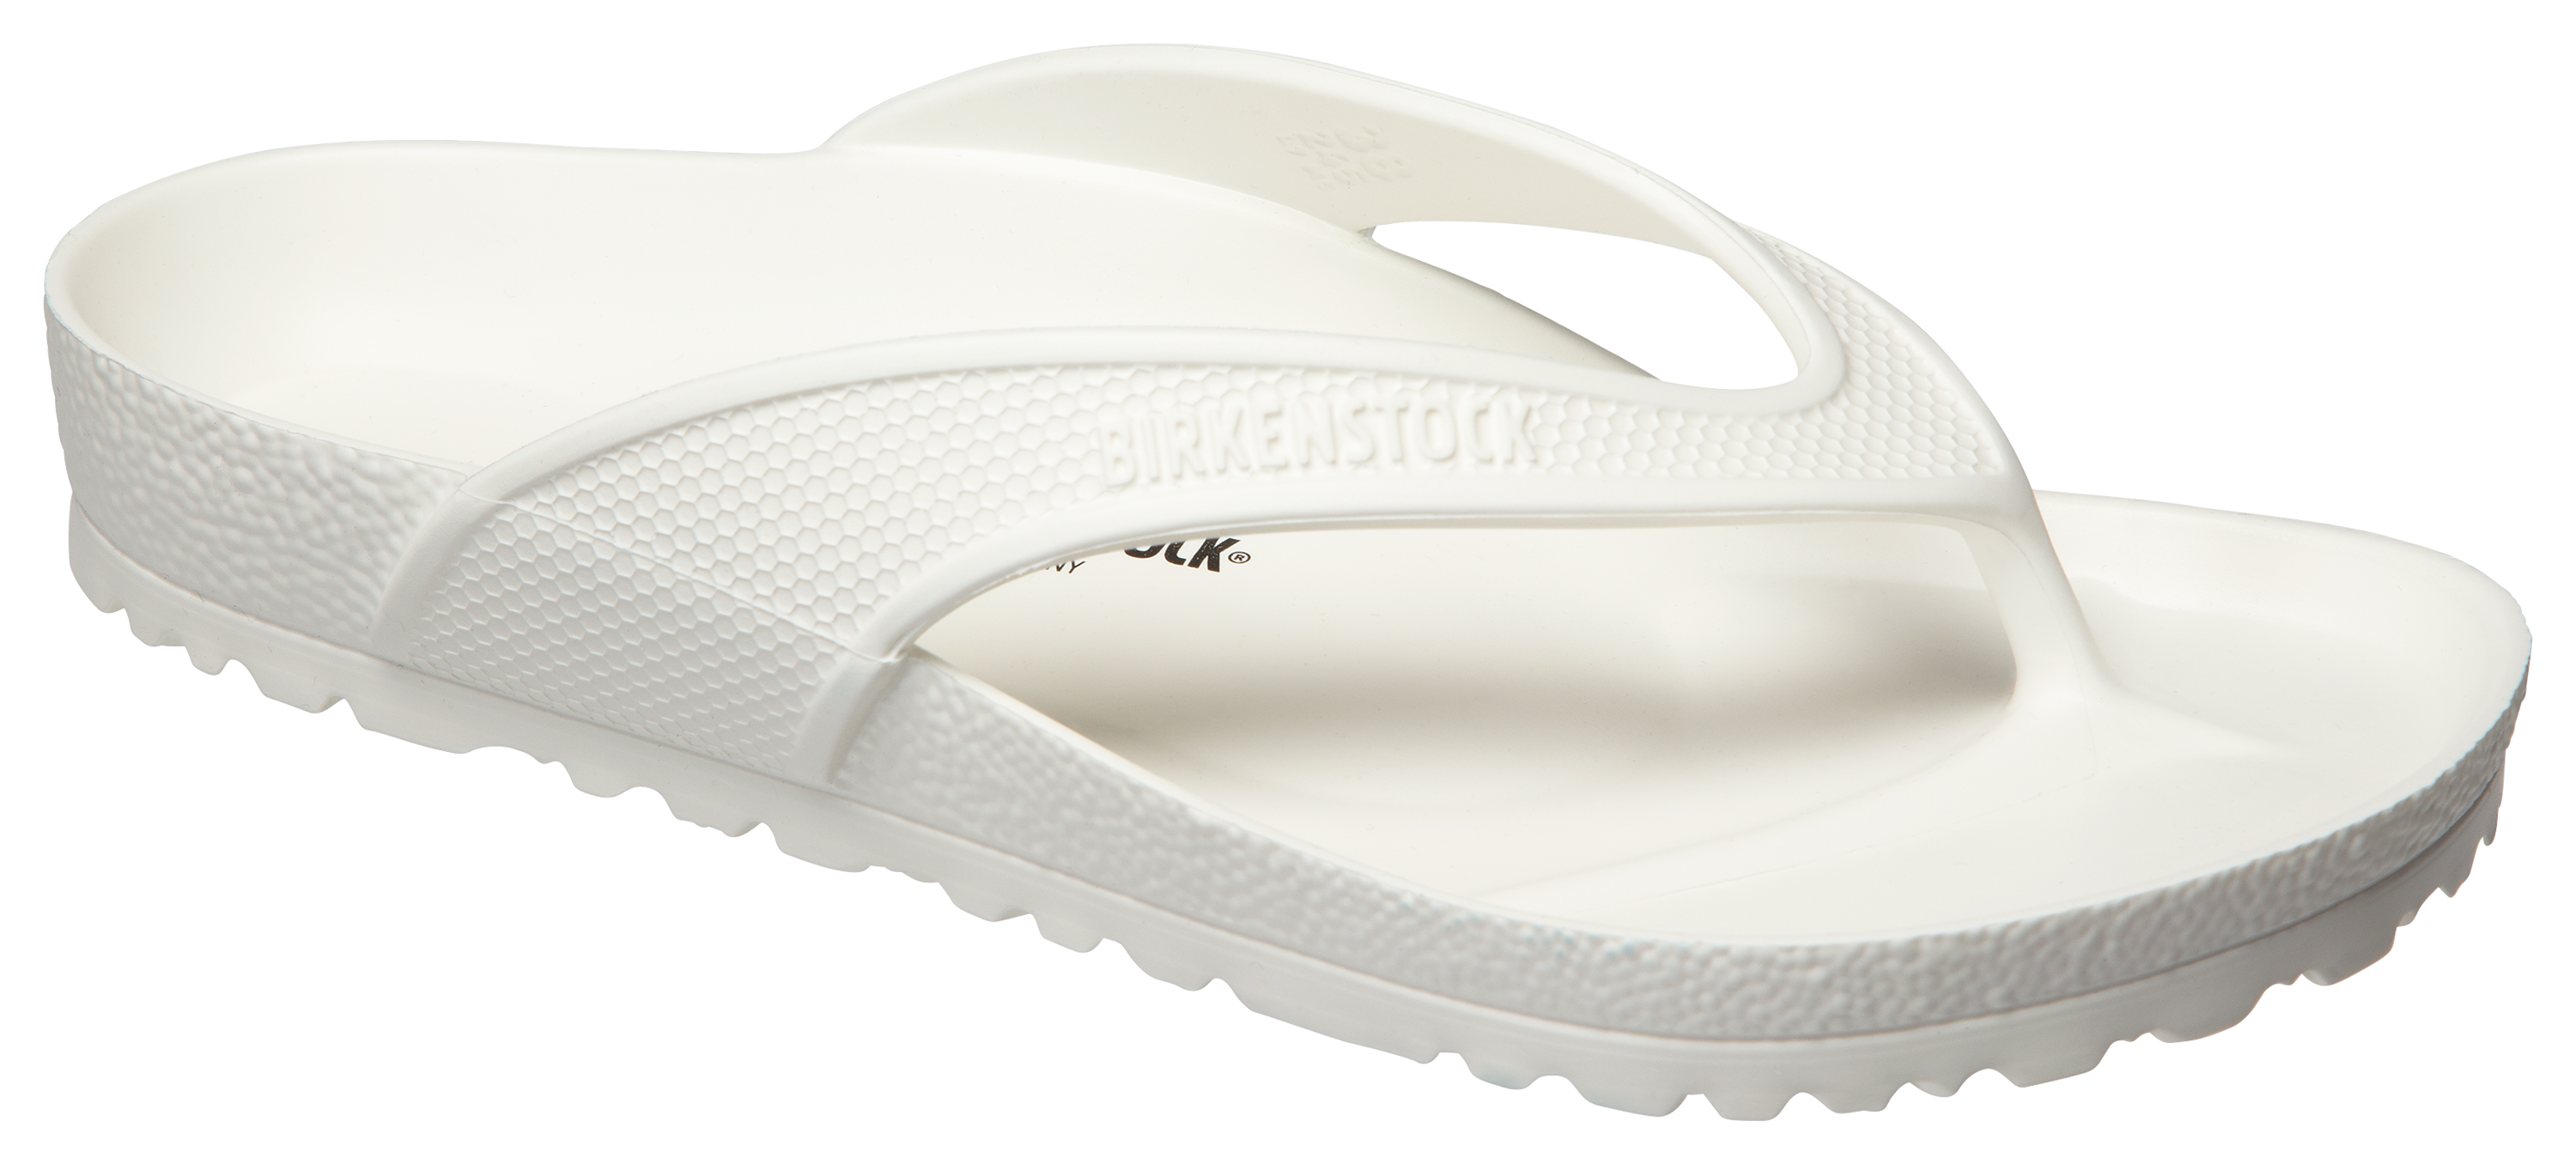 Birkenstock Honolulu EVA Thong Sandals for Ladies White 40M